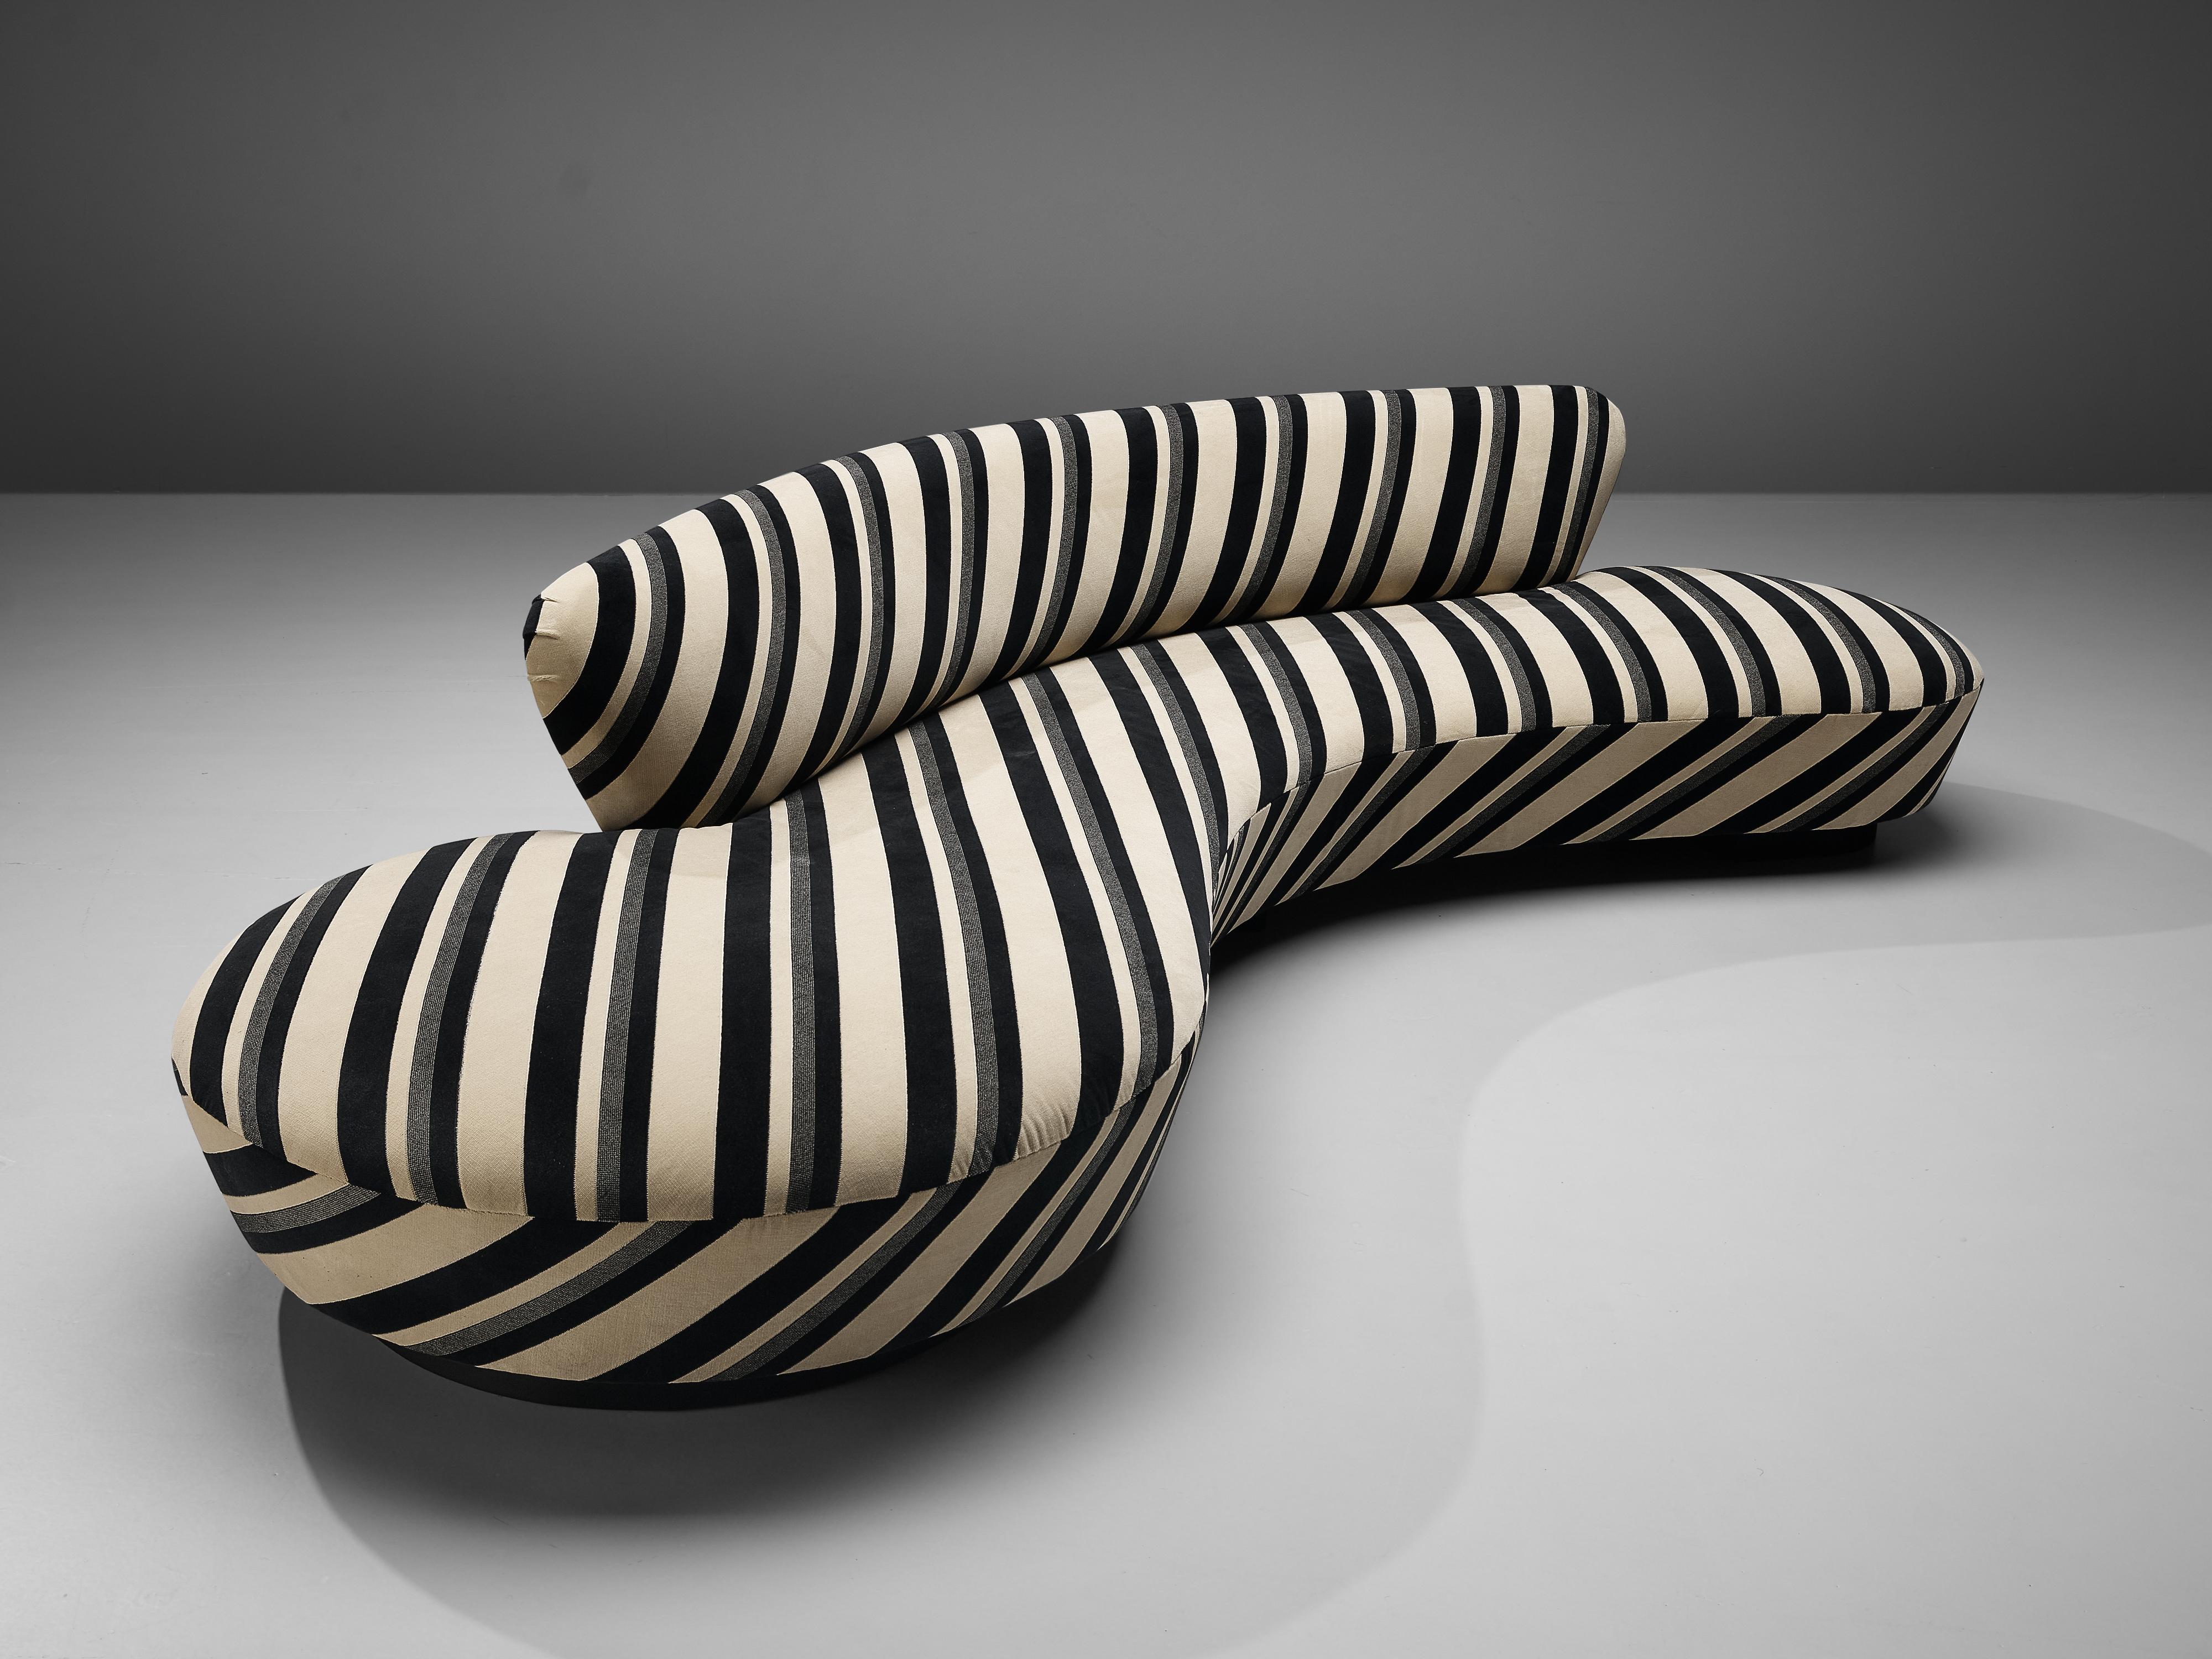 American Iconic Vladimir Kagan 'Serpentine' Sofa in Striped Upholstery